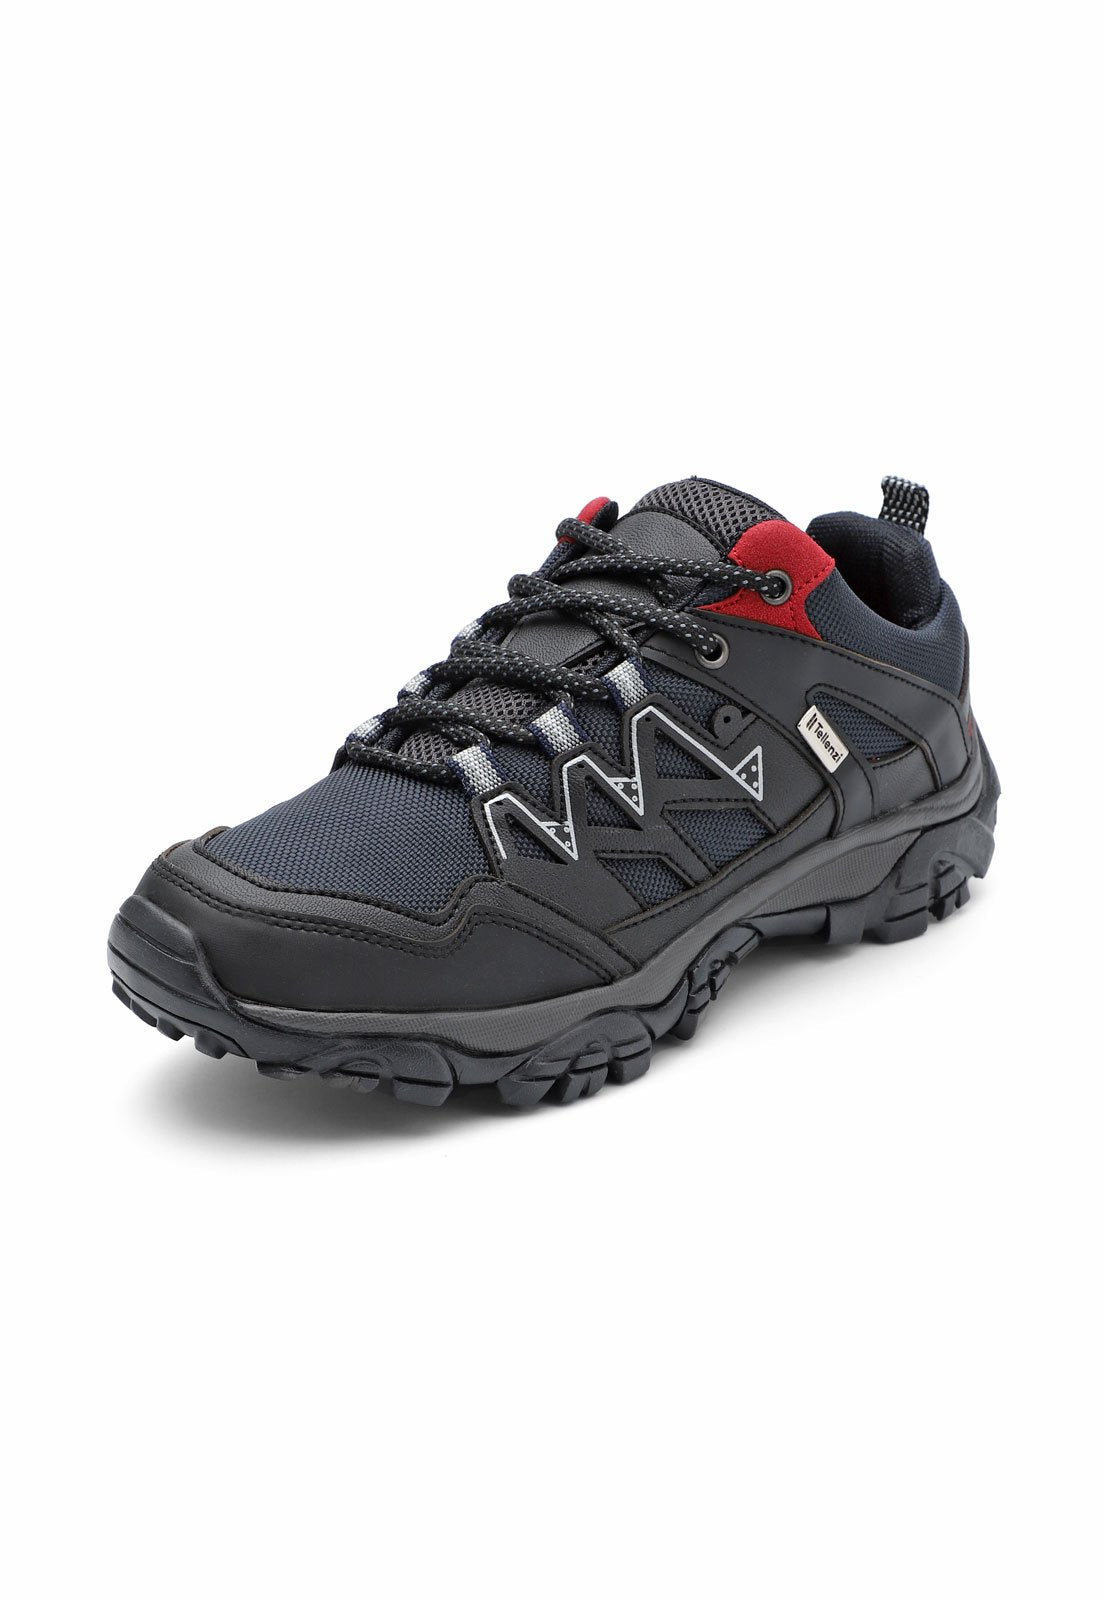 Zapato Hombre Outdoor Negro-Rojo Tellenzi 2309